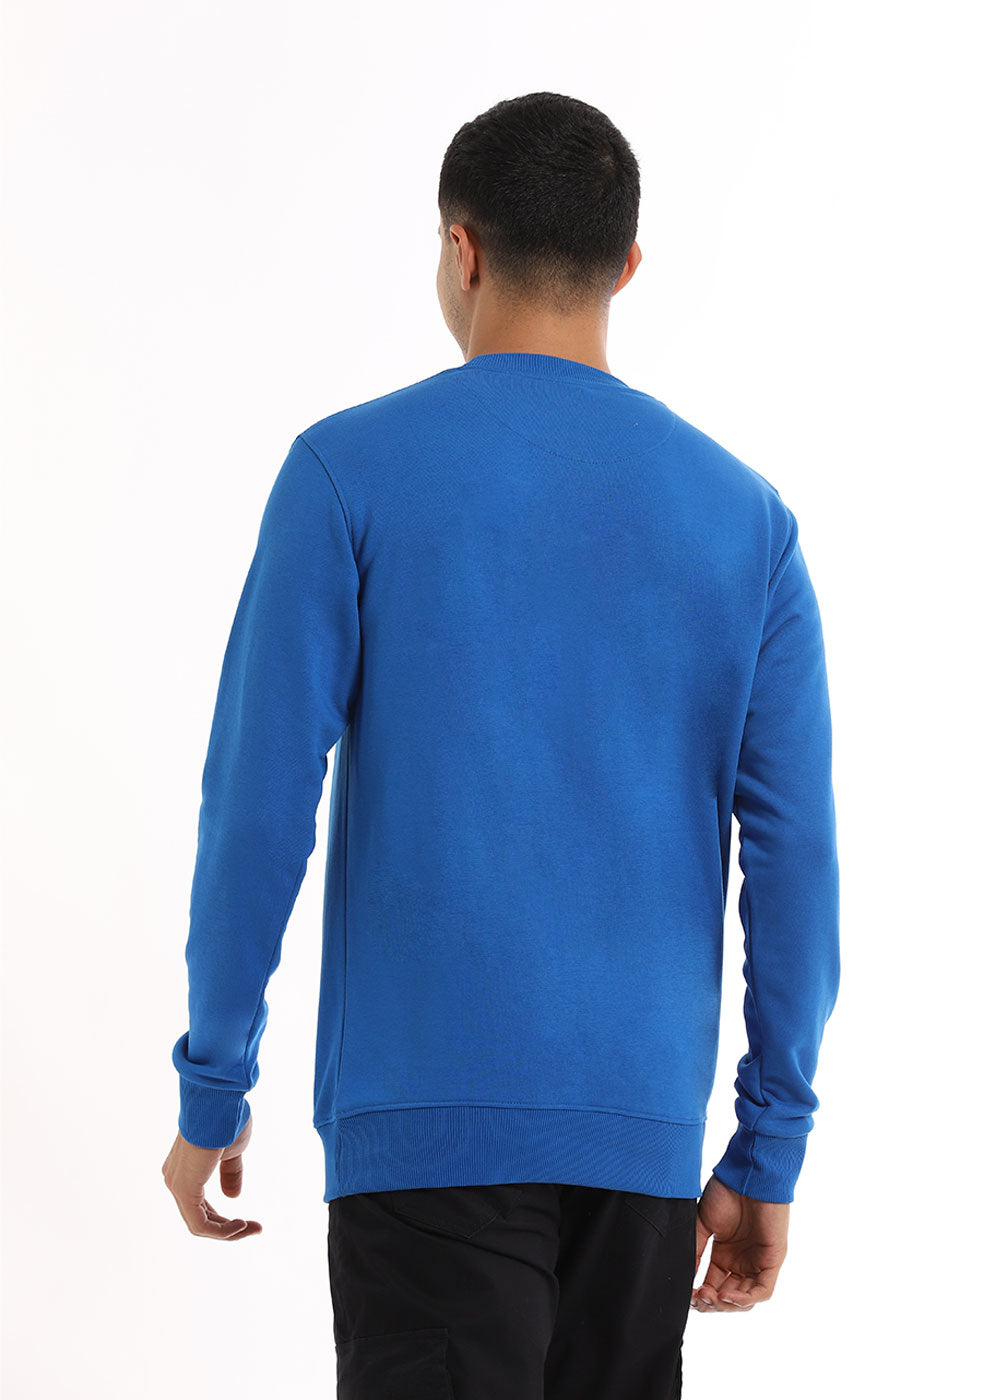 Navy Blue Sweatshirt